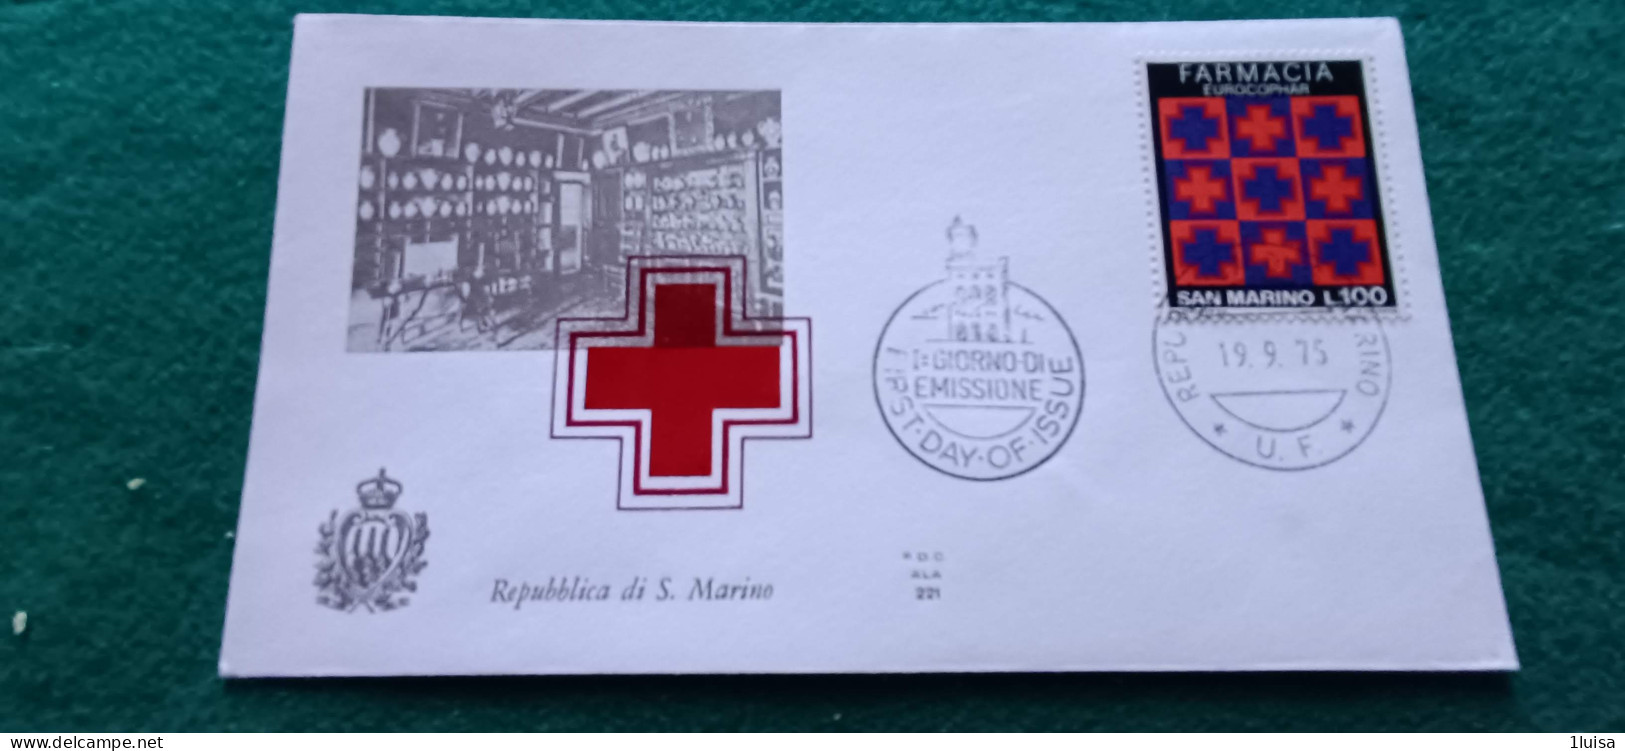 SAN MARINO 19/9/75 Croce Rossa Farmacia - Exprespost